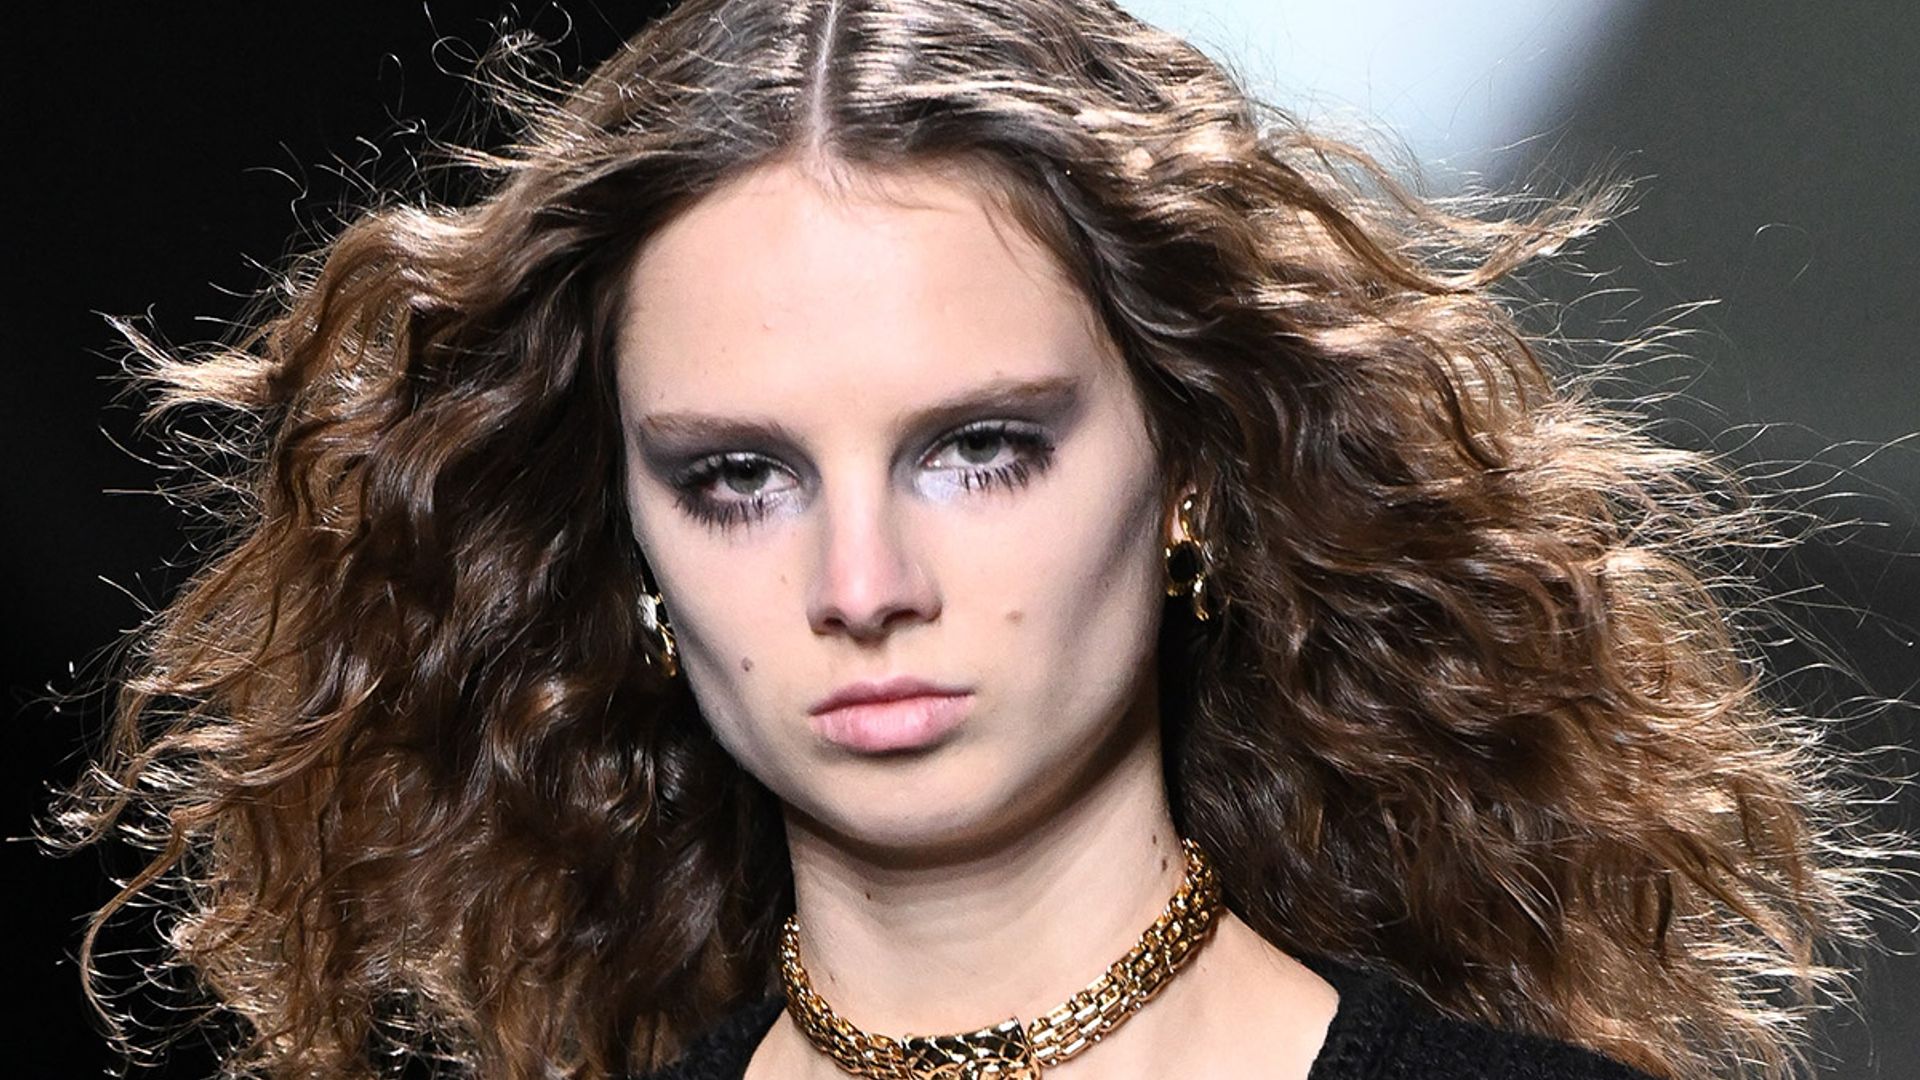 Chanel's Paris Fashion Week silver eyeshadow will literally take you 5 minutes